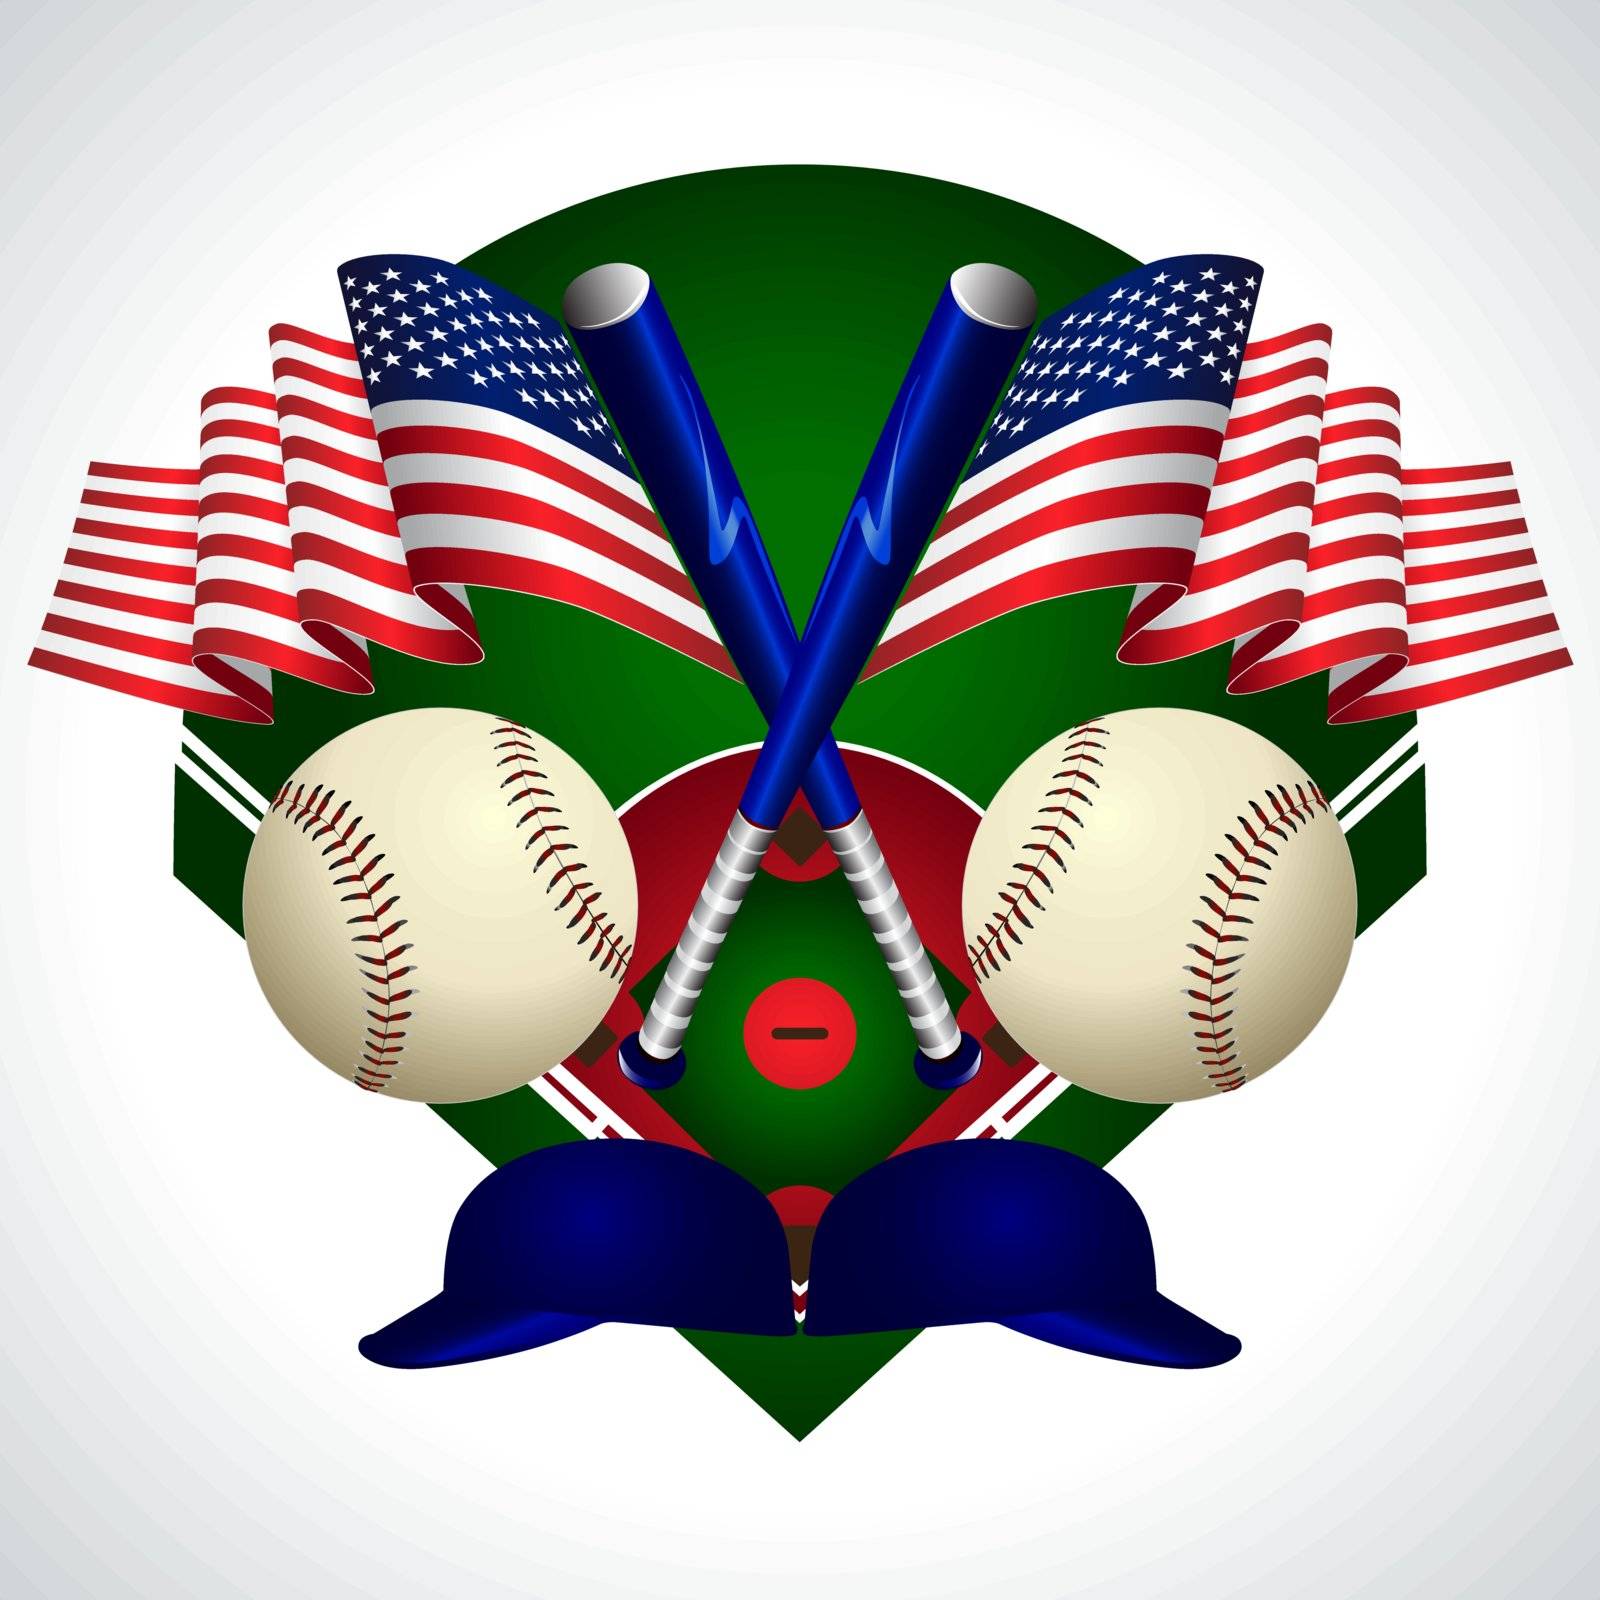 Emblem of USA flag and baseball equipment